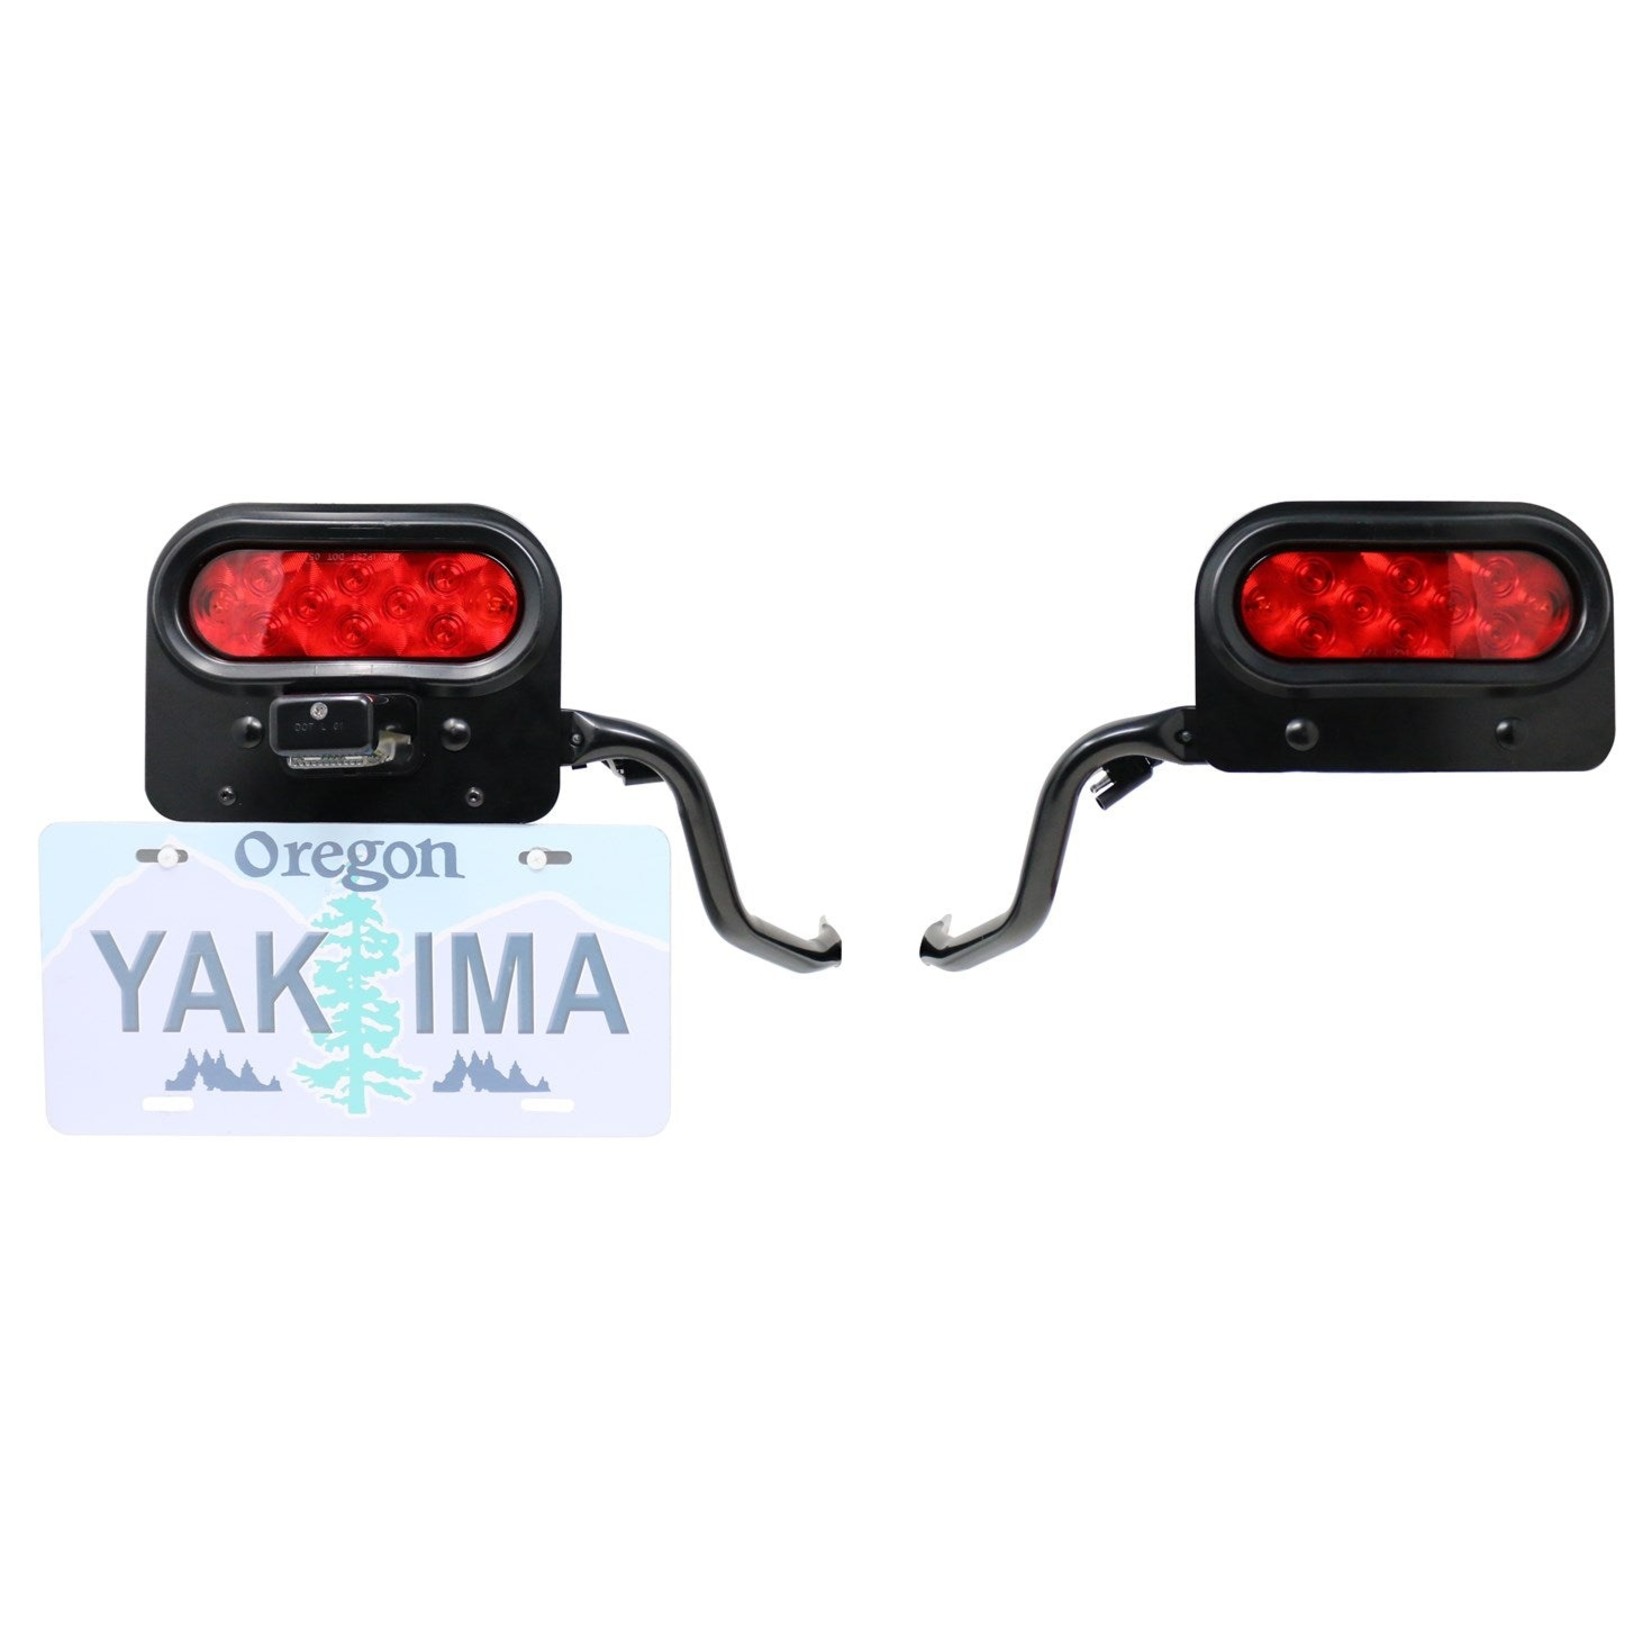 Yakima Yakima EXO LitKit - 8002720